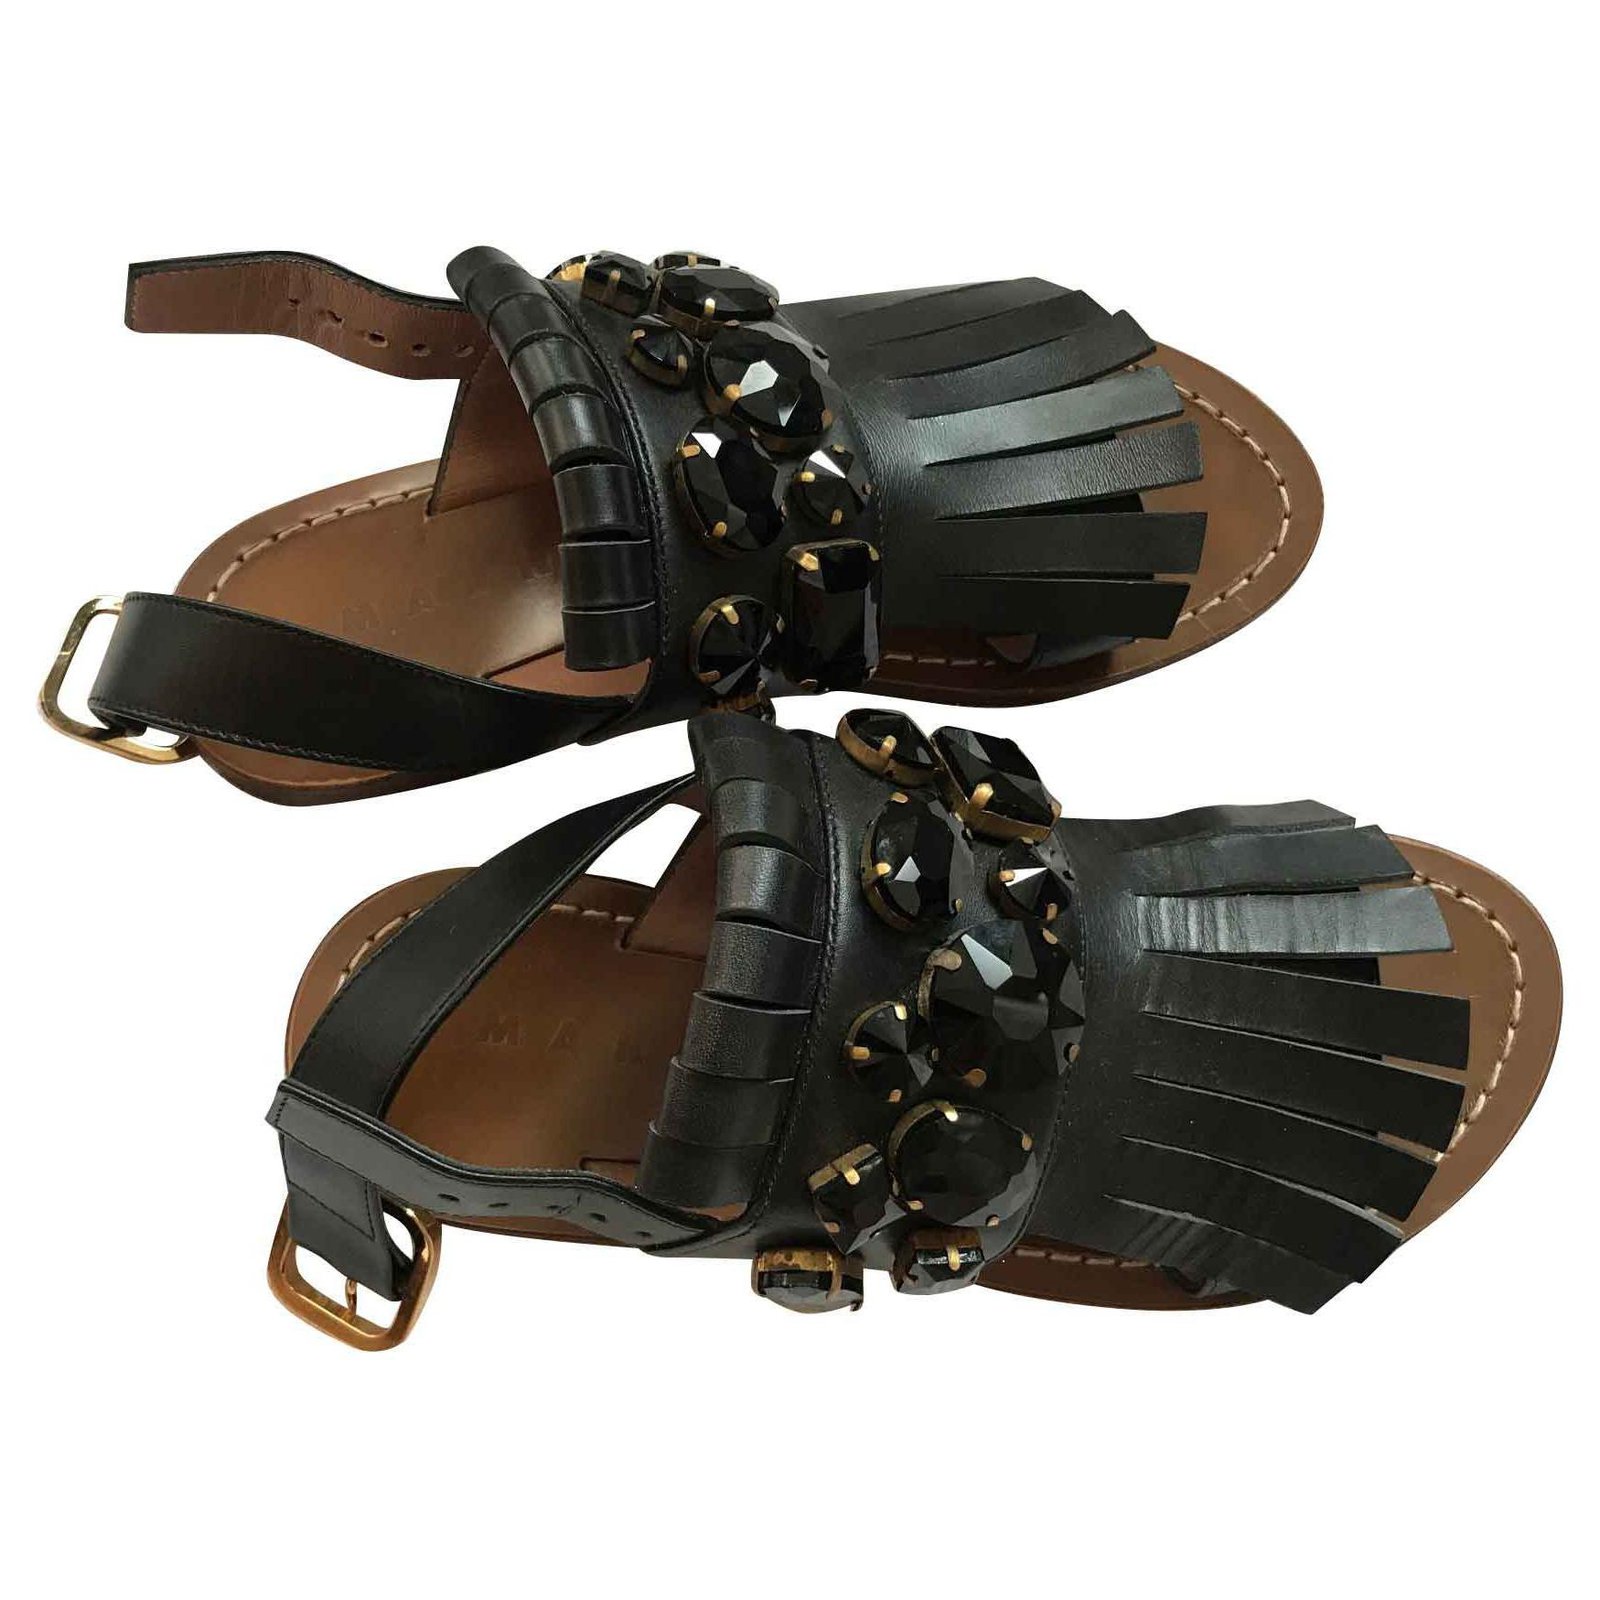 marni sandals 2019